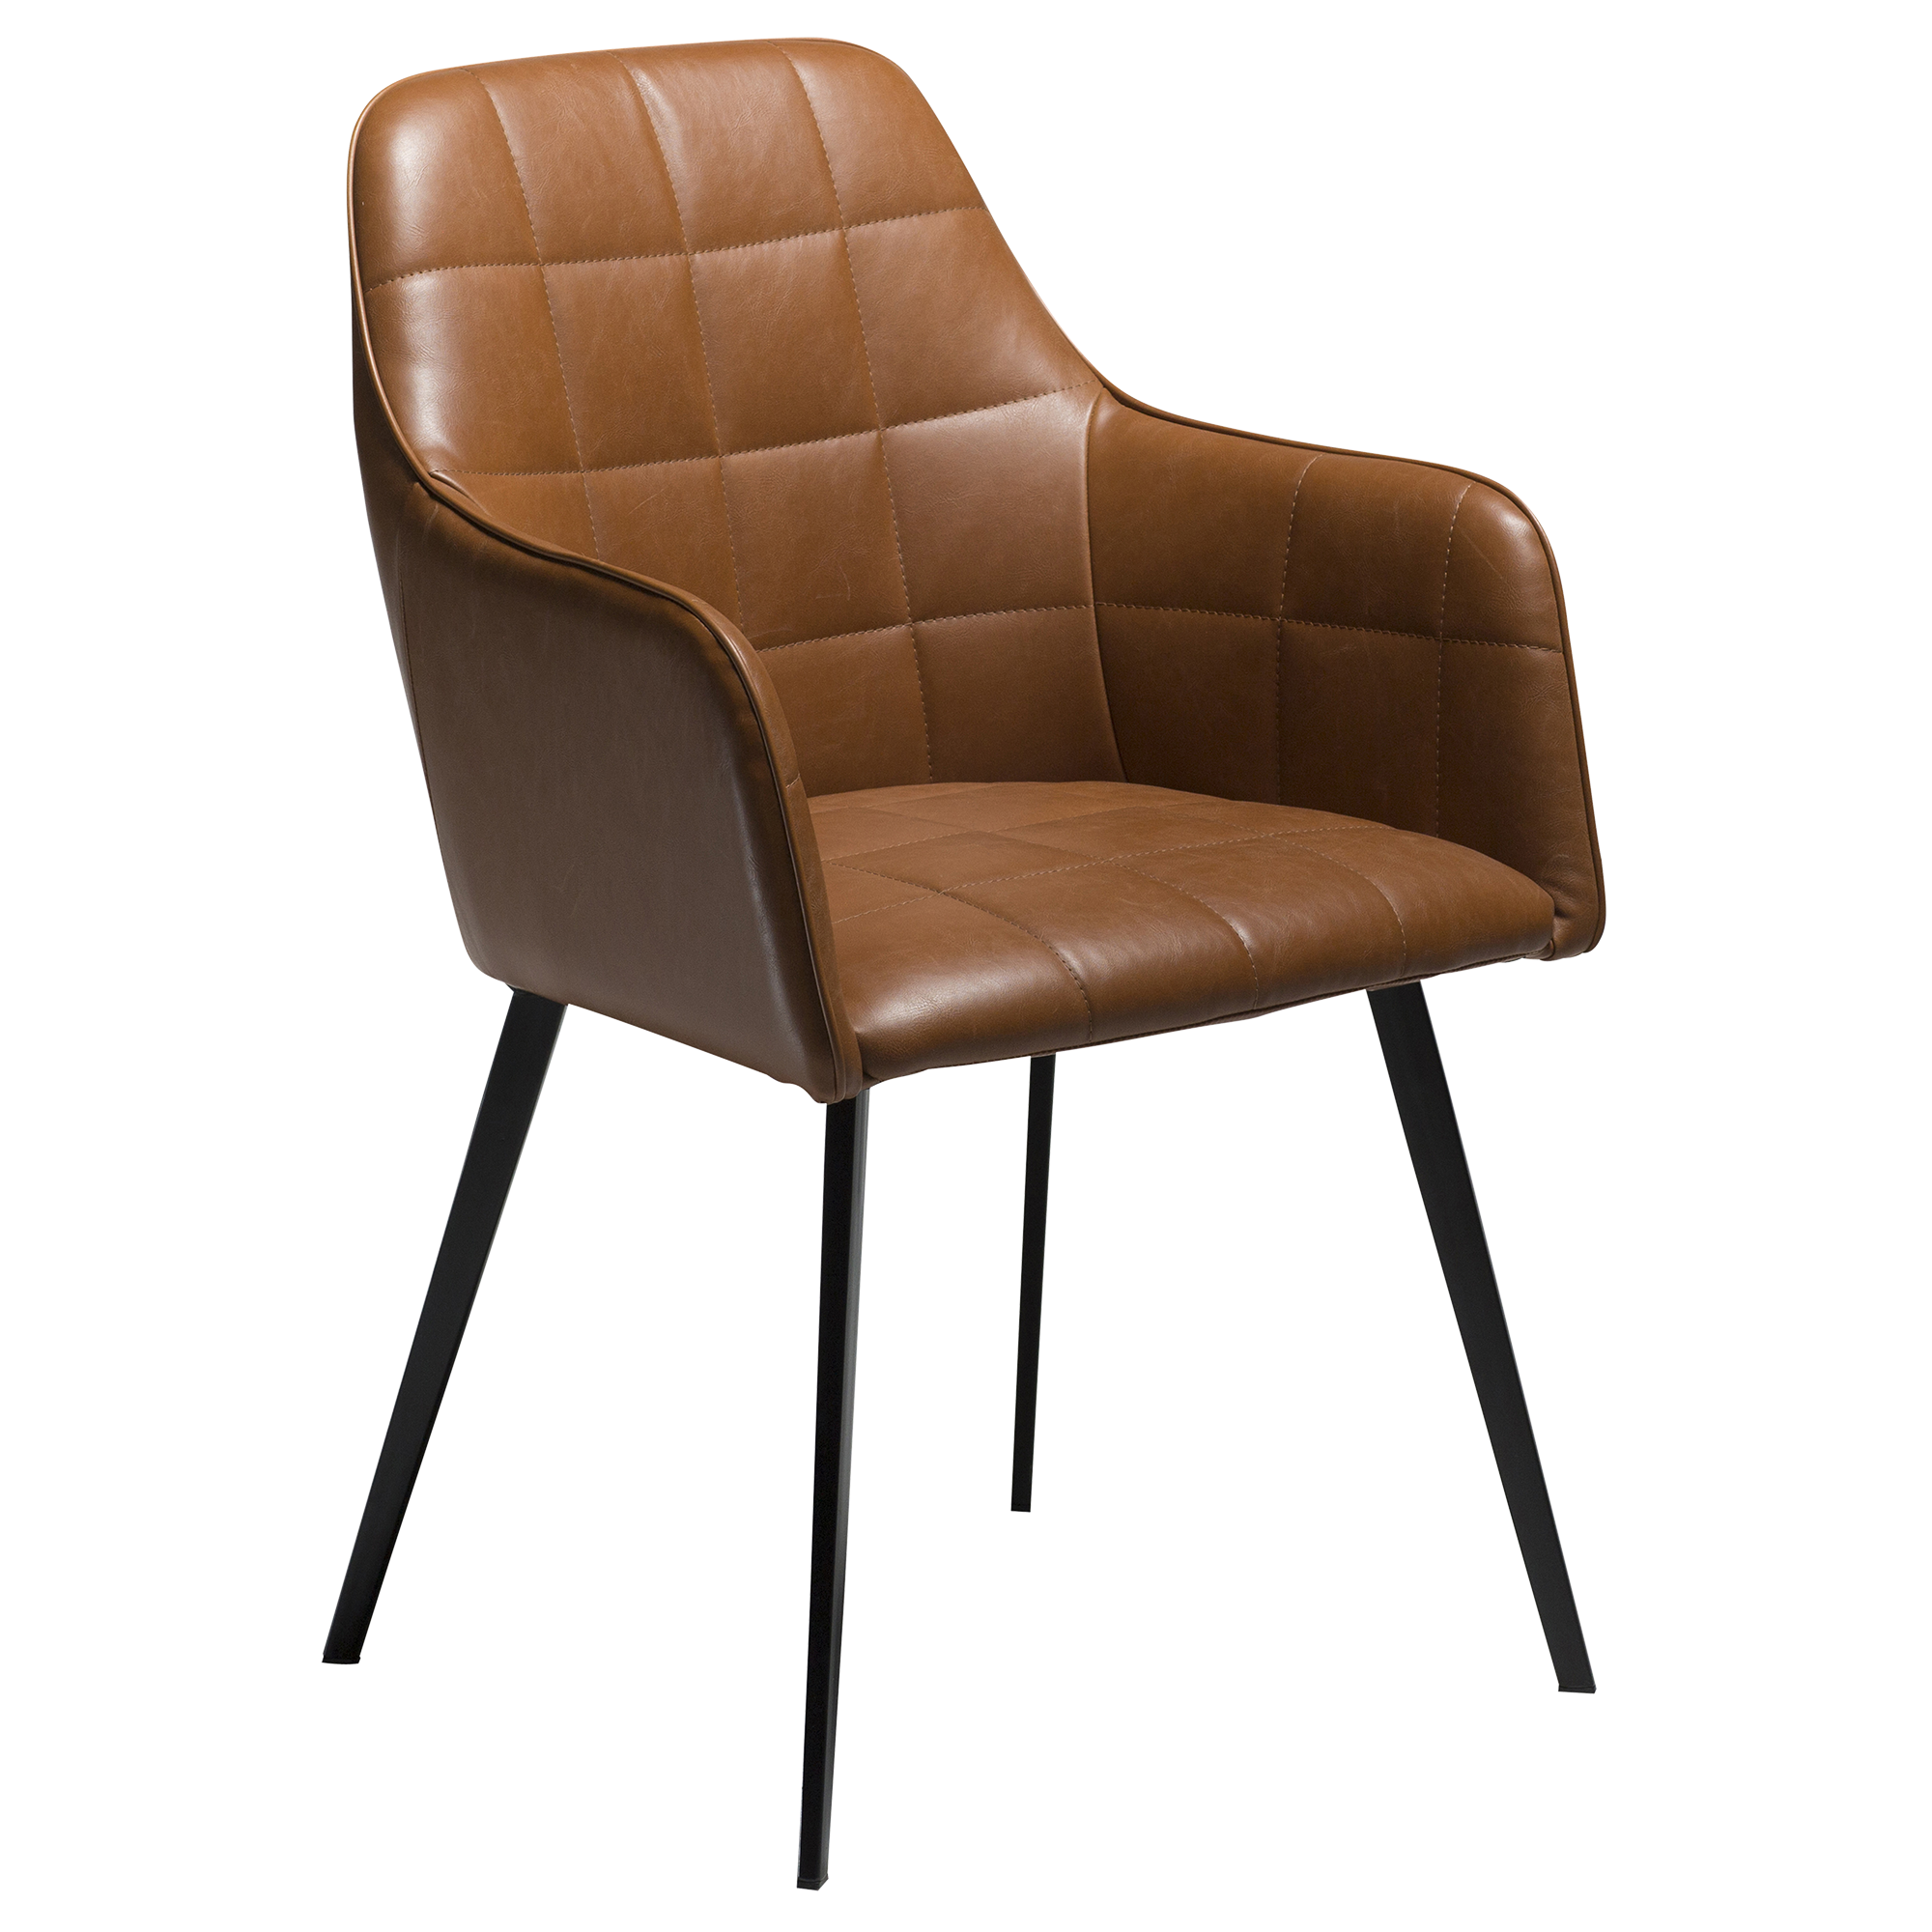 Dan-Form Sessel Embrace - Vintage hellbraunes Kunstleder mit schwarzen Beinen